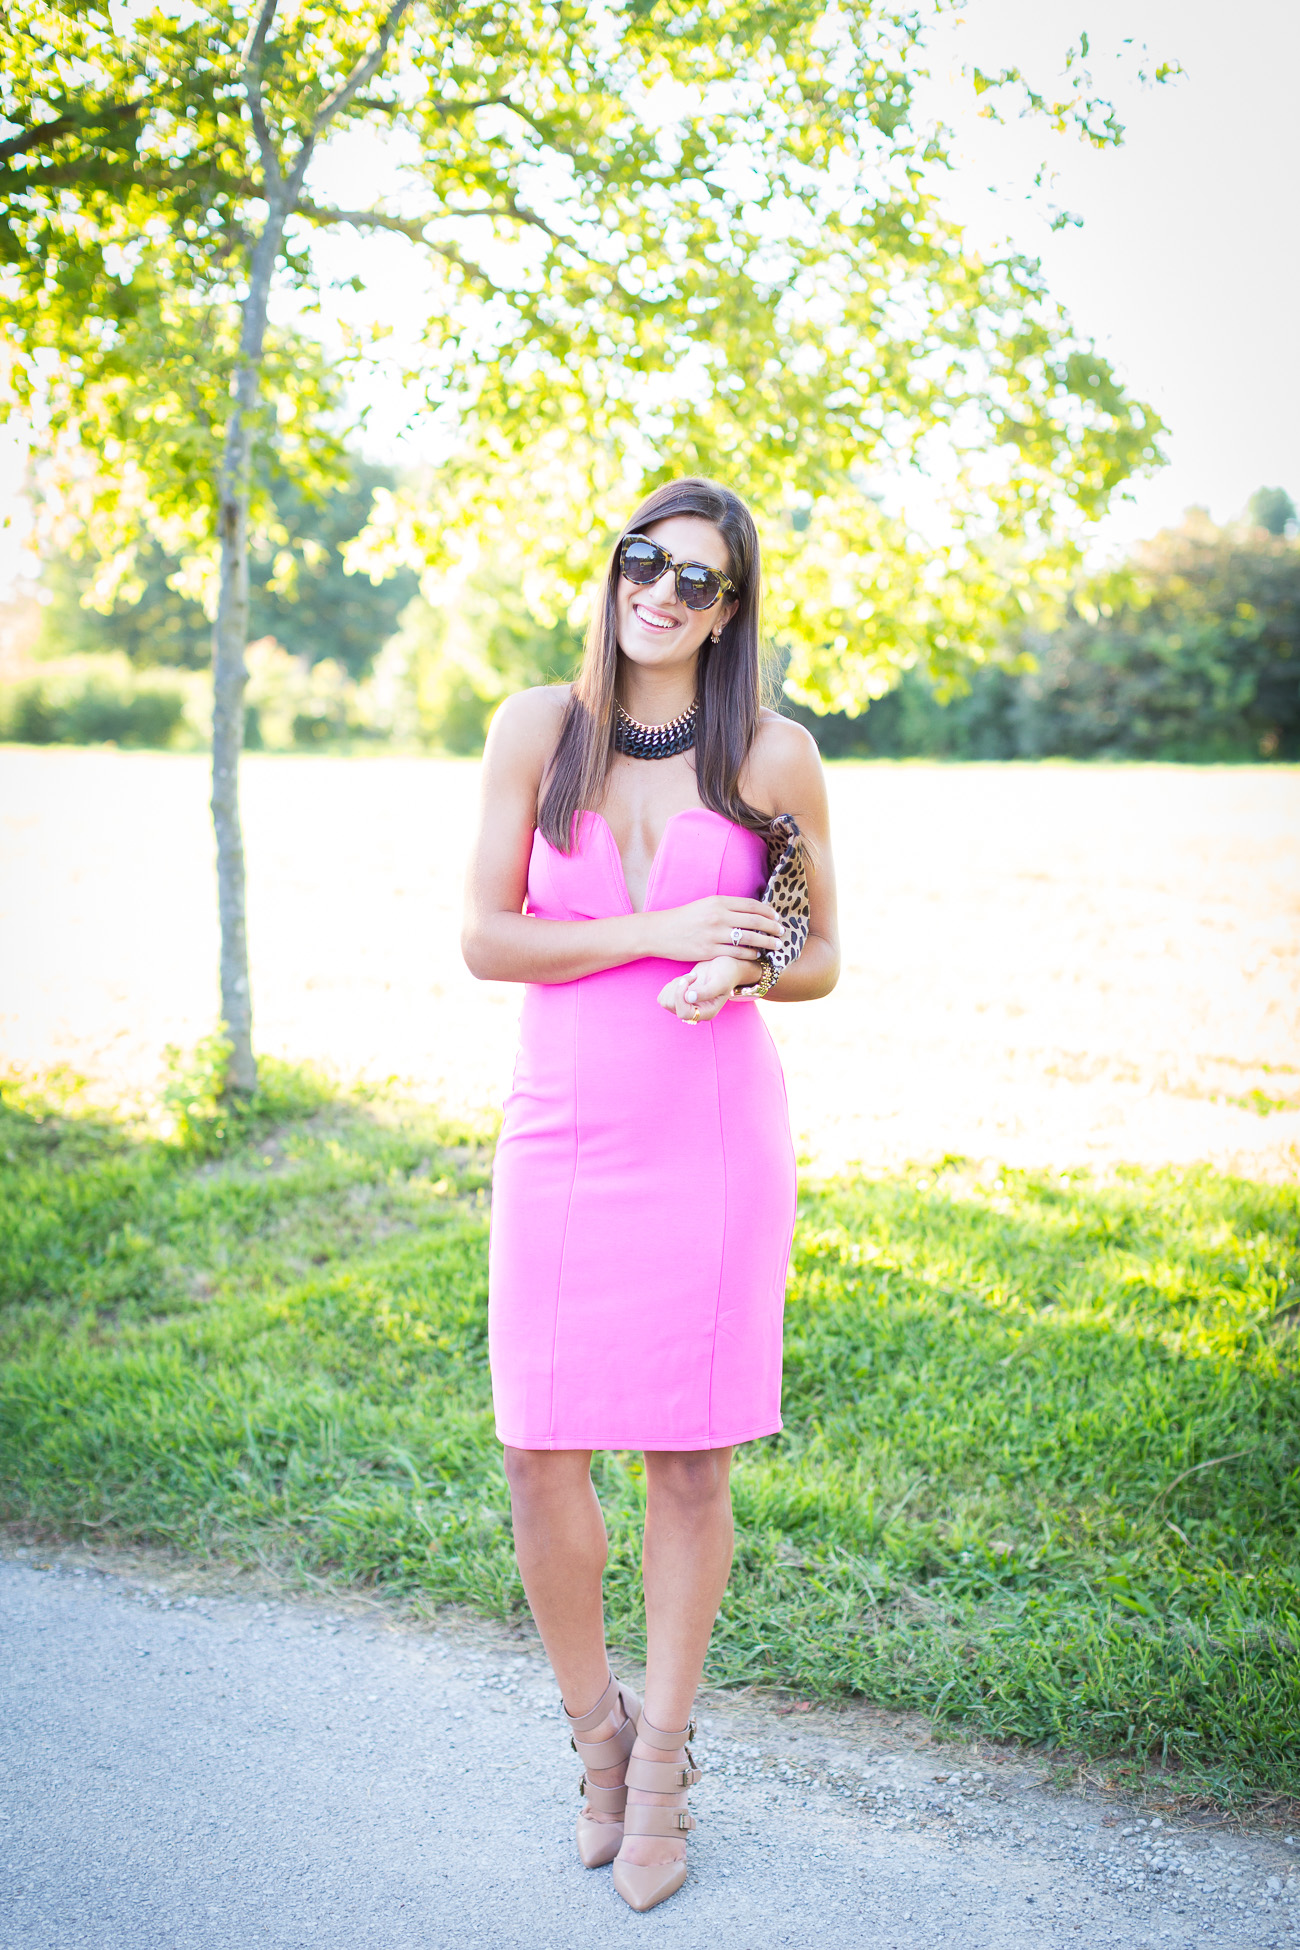 https://asoutherndrawl.com/wp-content/uploads/2015/08/pink-dress-a-southern-drawl.jpg